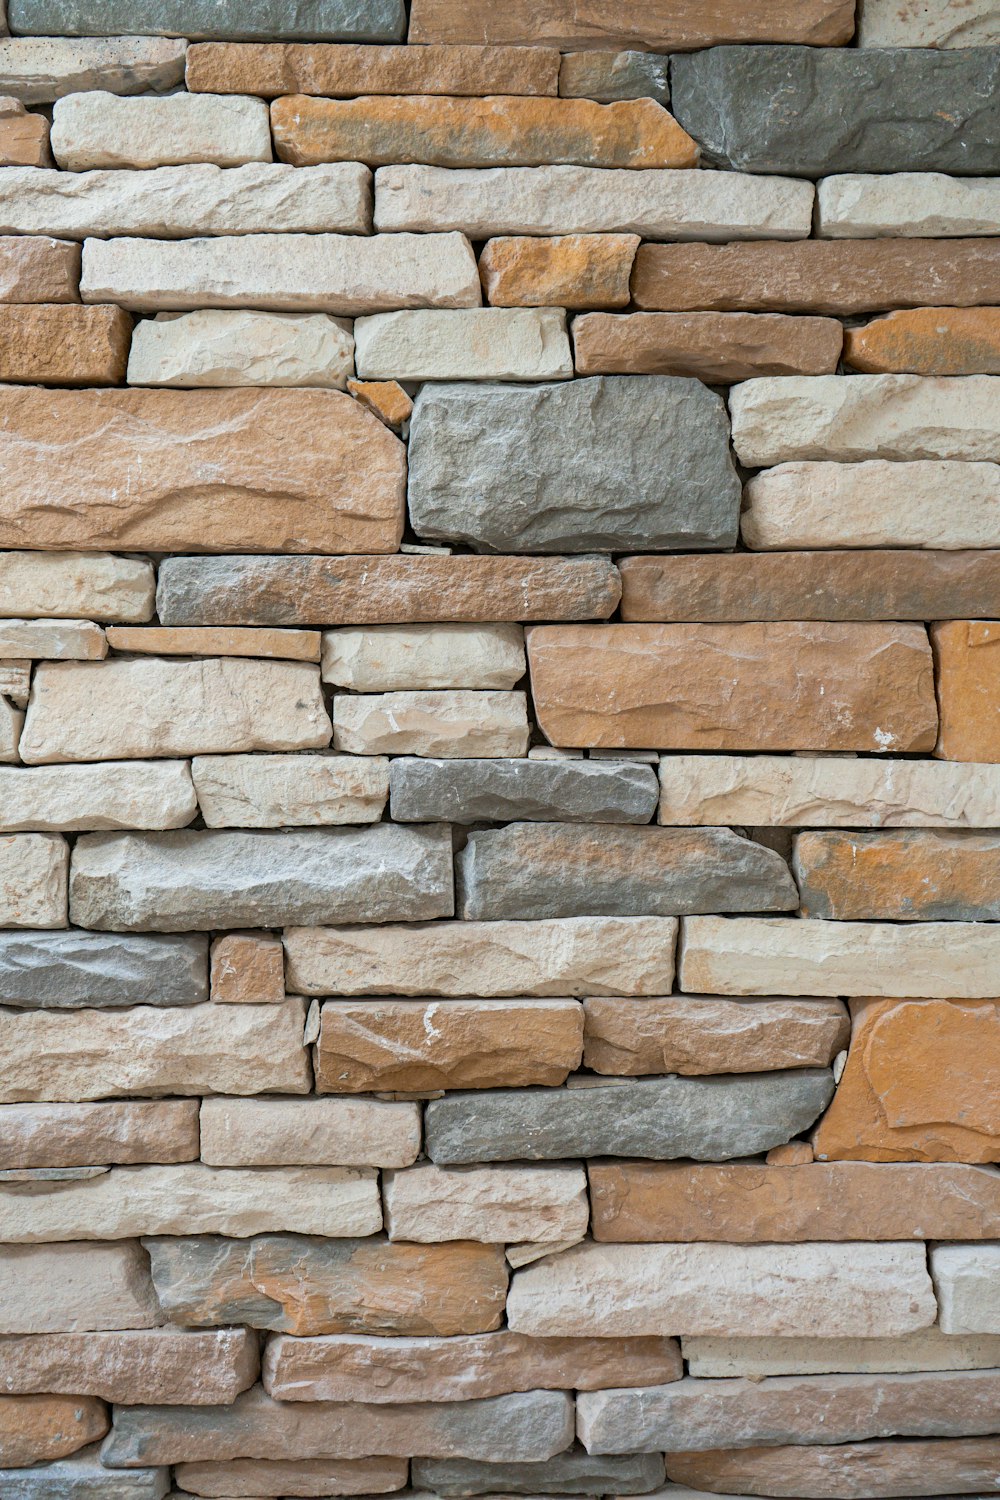 a close-up of a brick wall